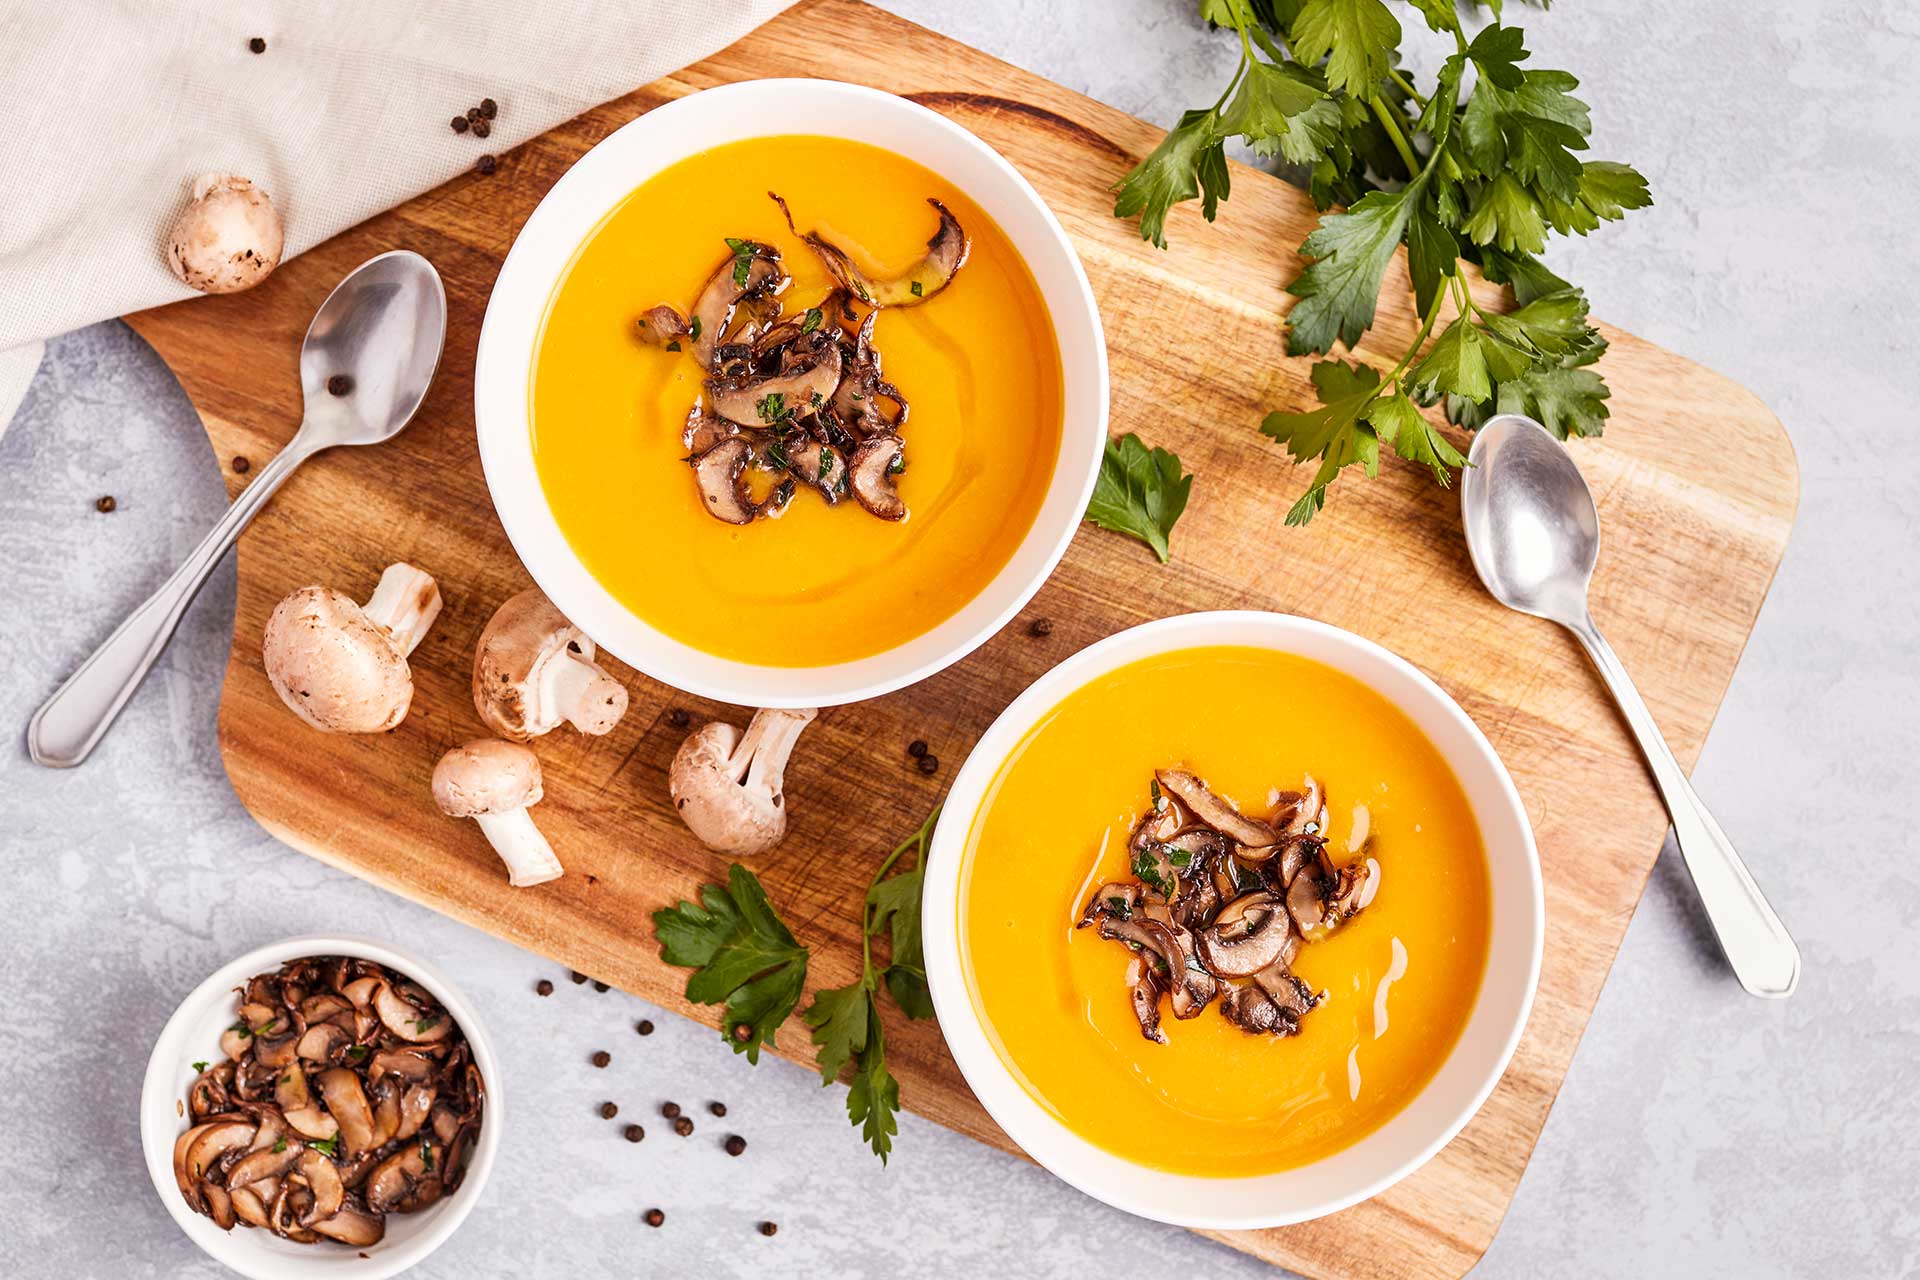 Pumpkin Soup with Sautéed Mushrooms (Italy)